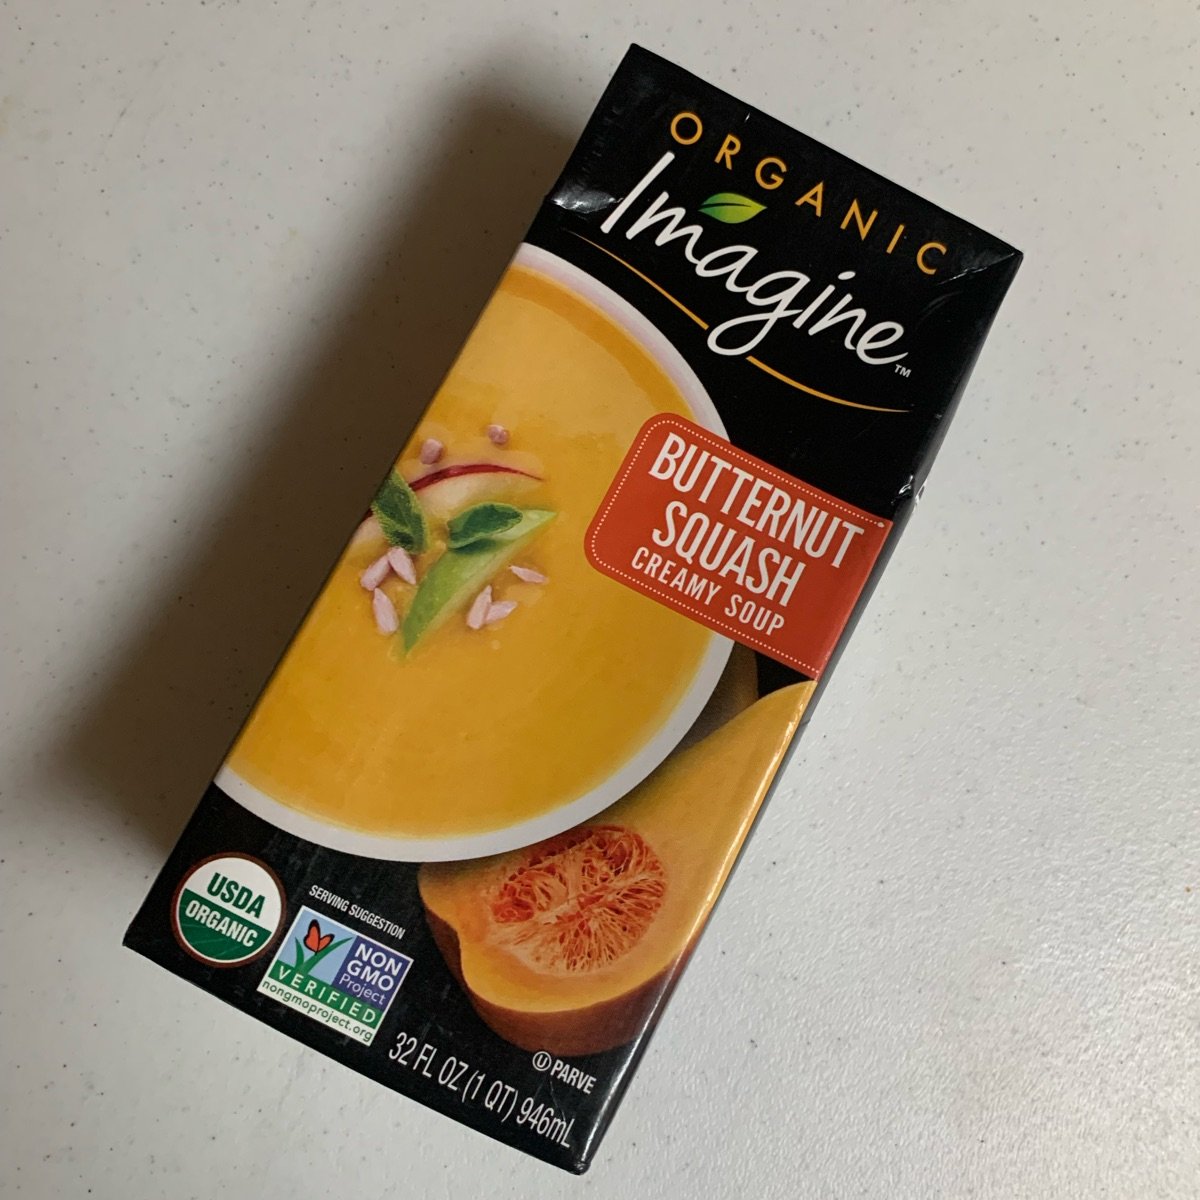 Imagine Organic Creamy Soup Reviews & Info (All Dairy-Free!)